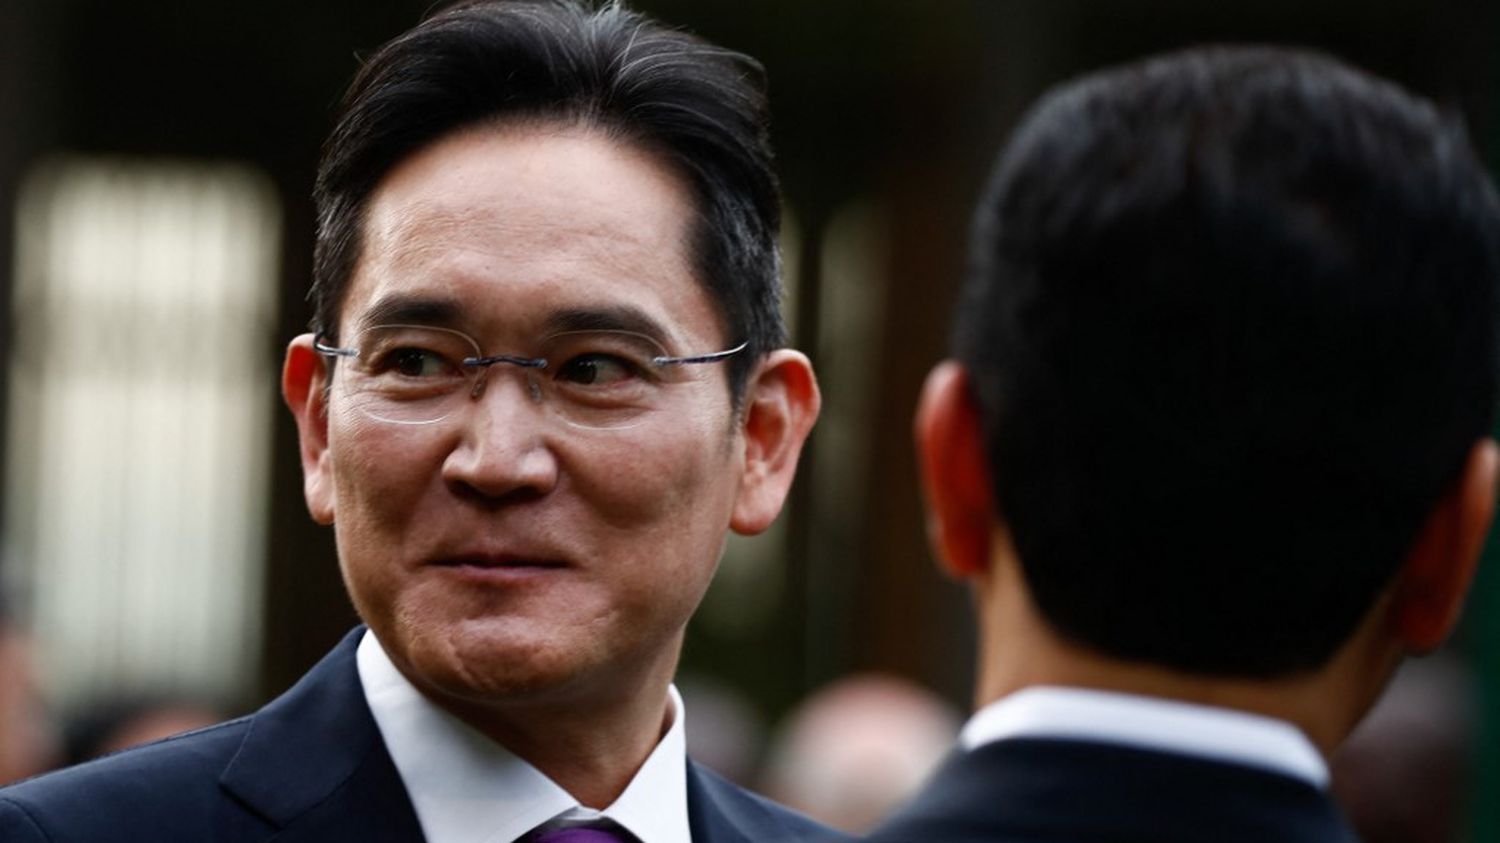 South Korea: Samsung boss, convicted of corruption, obtains a presidential pardon
